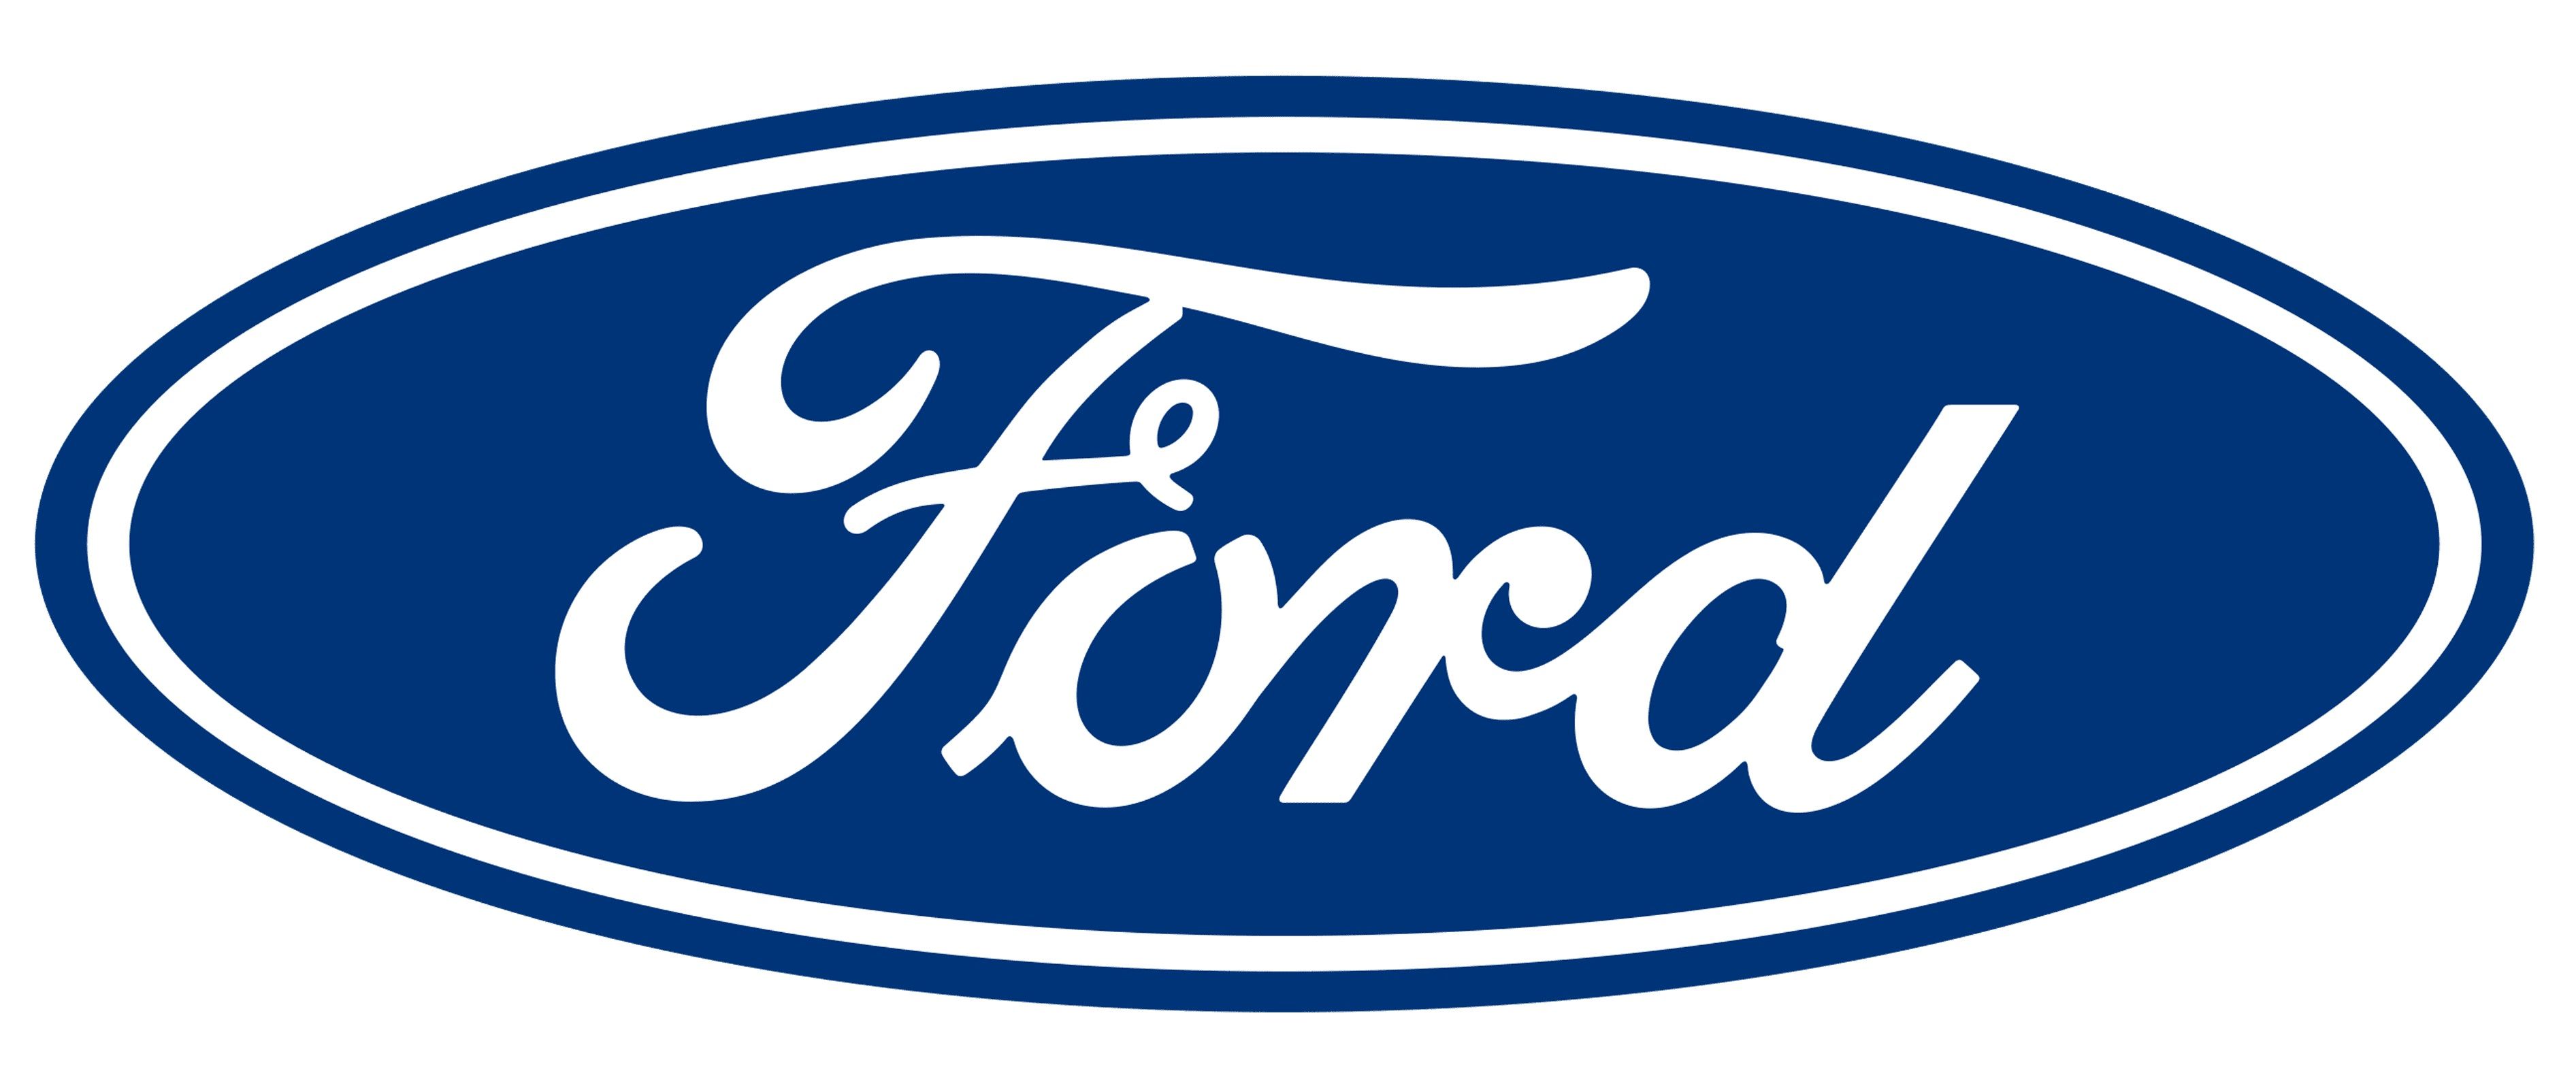 Ford hiring Associate